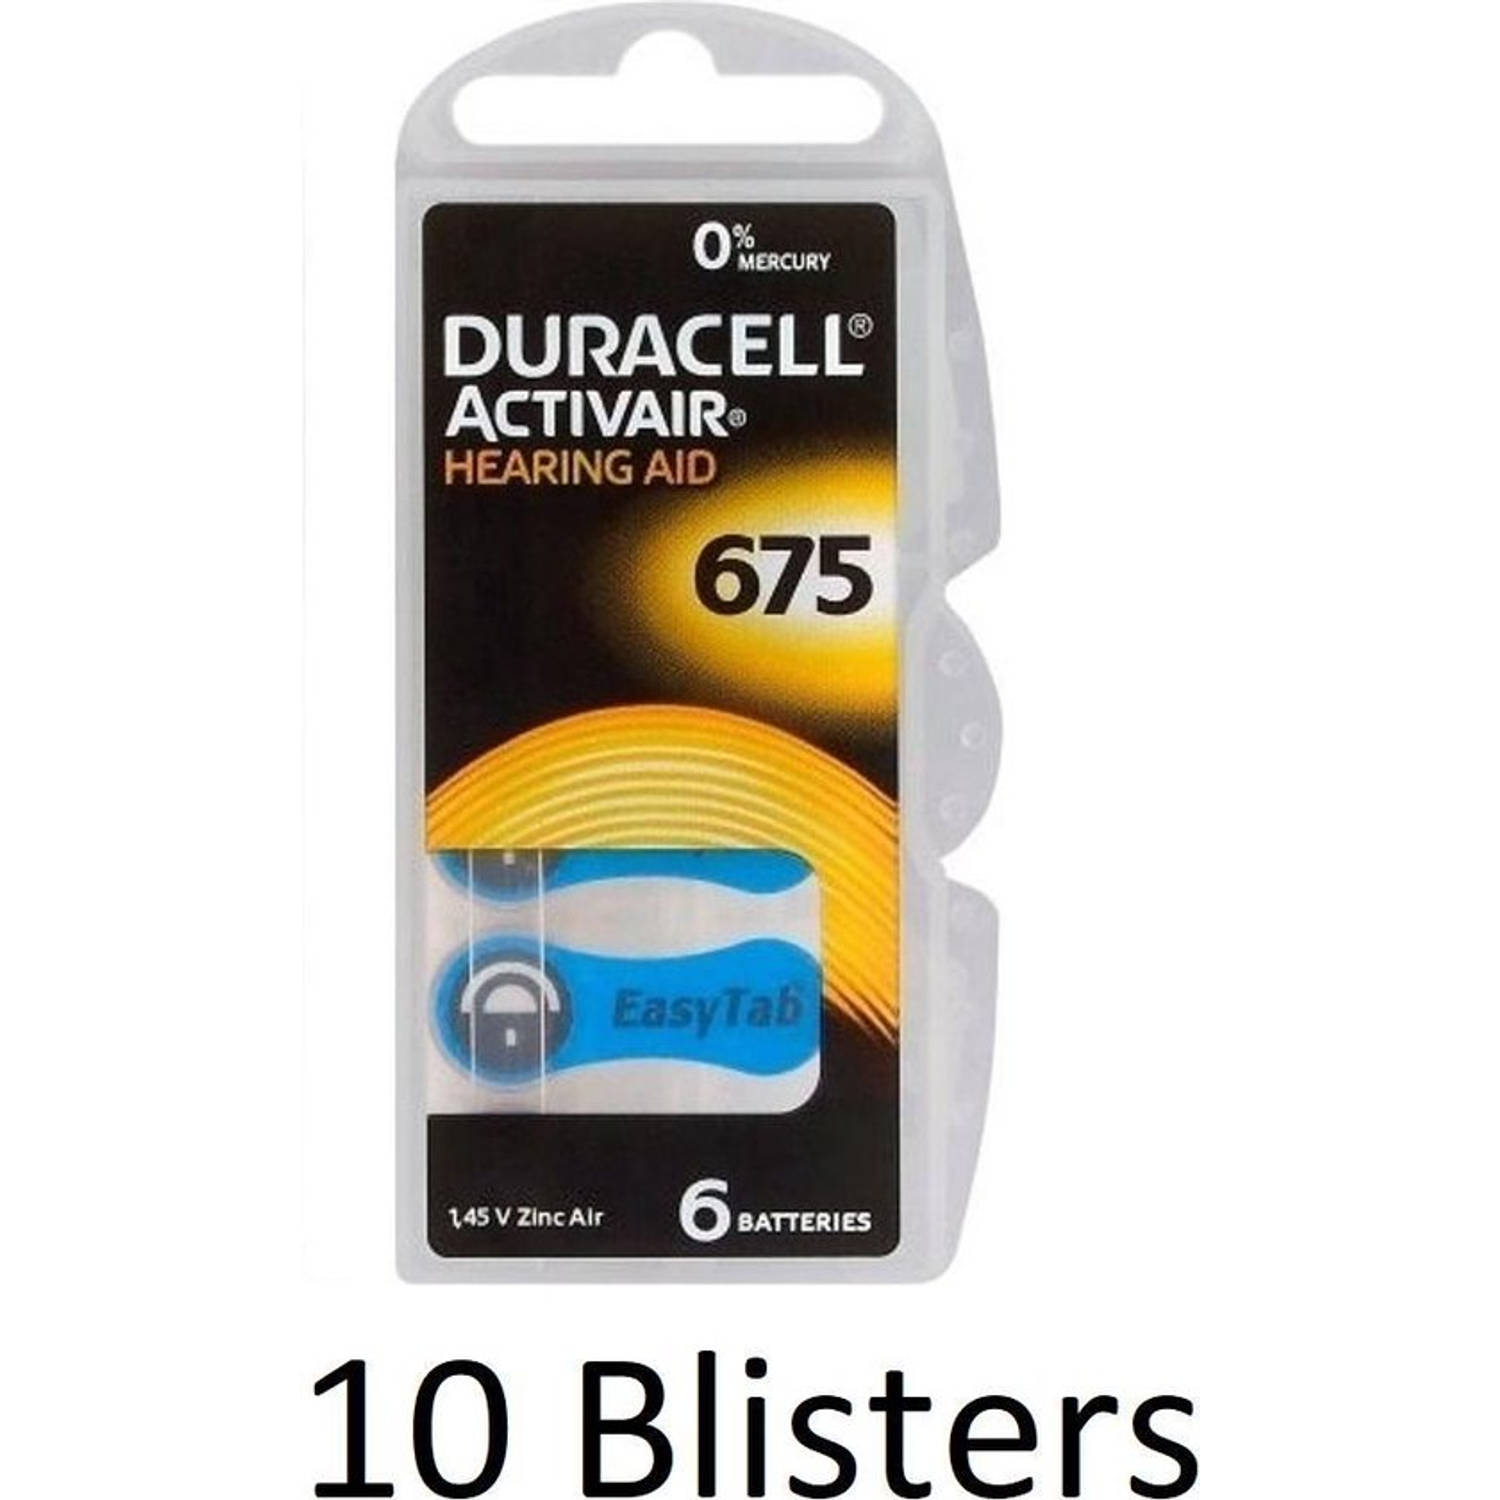 60 stuks (10 blisters a 6 st) Duracell DA675 hoorapparaat batterij - Blauw